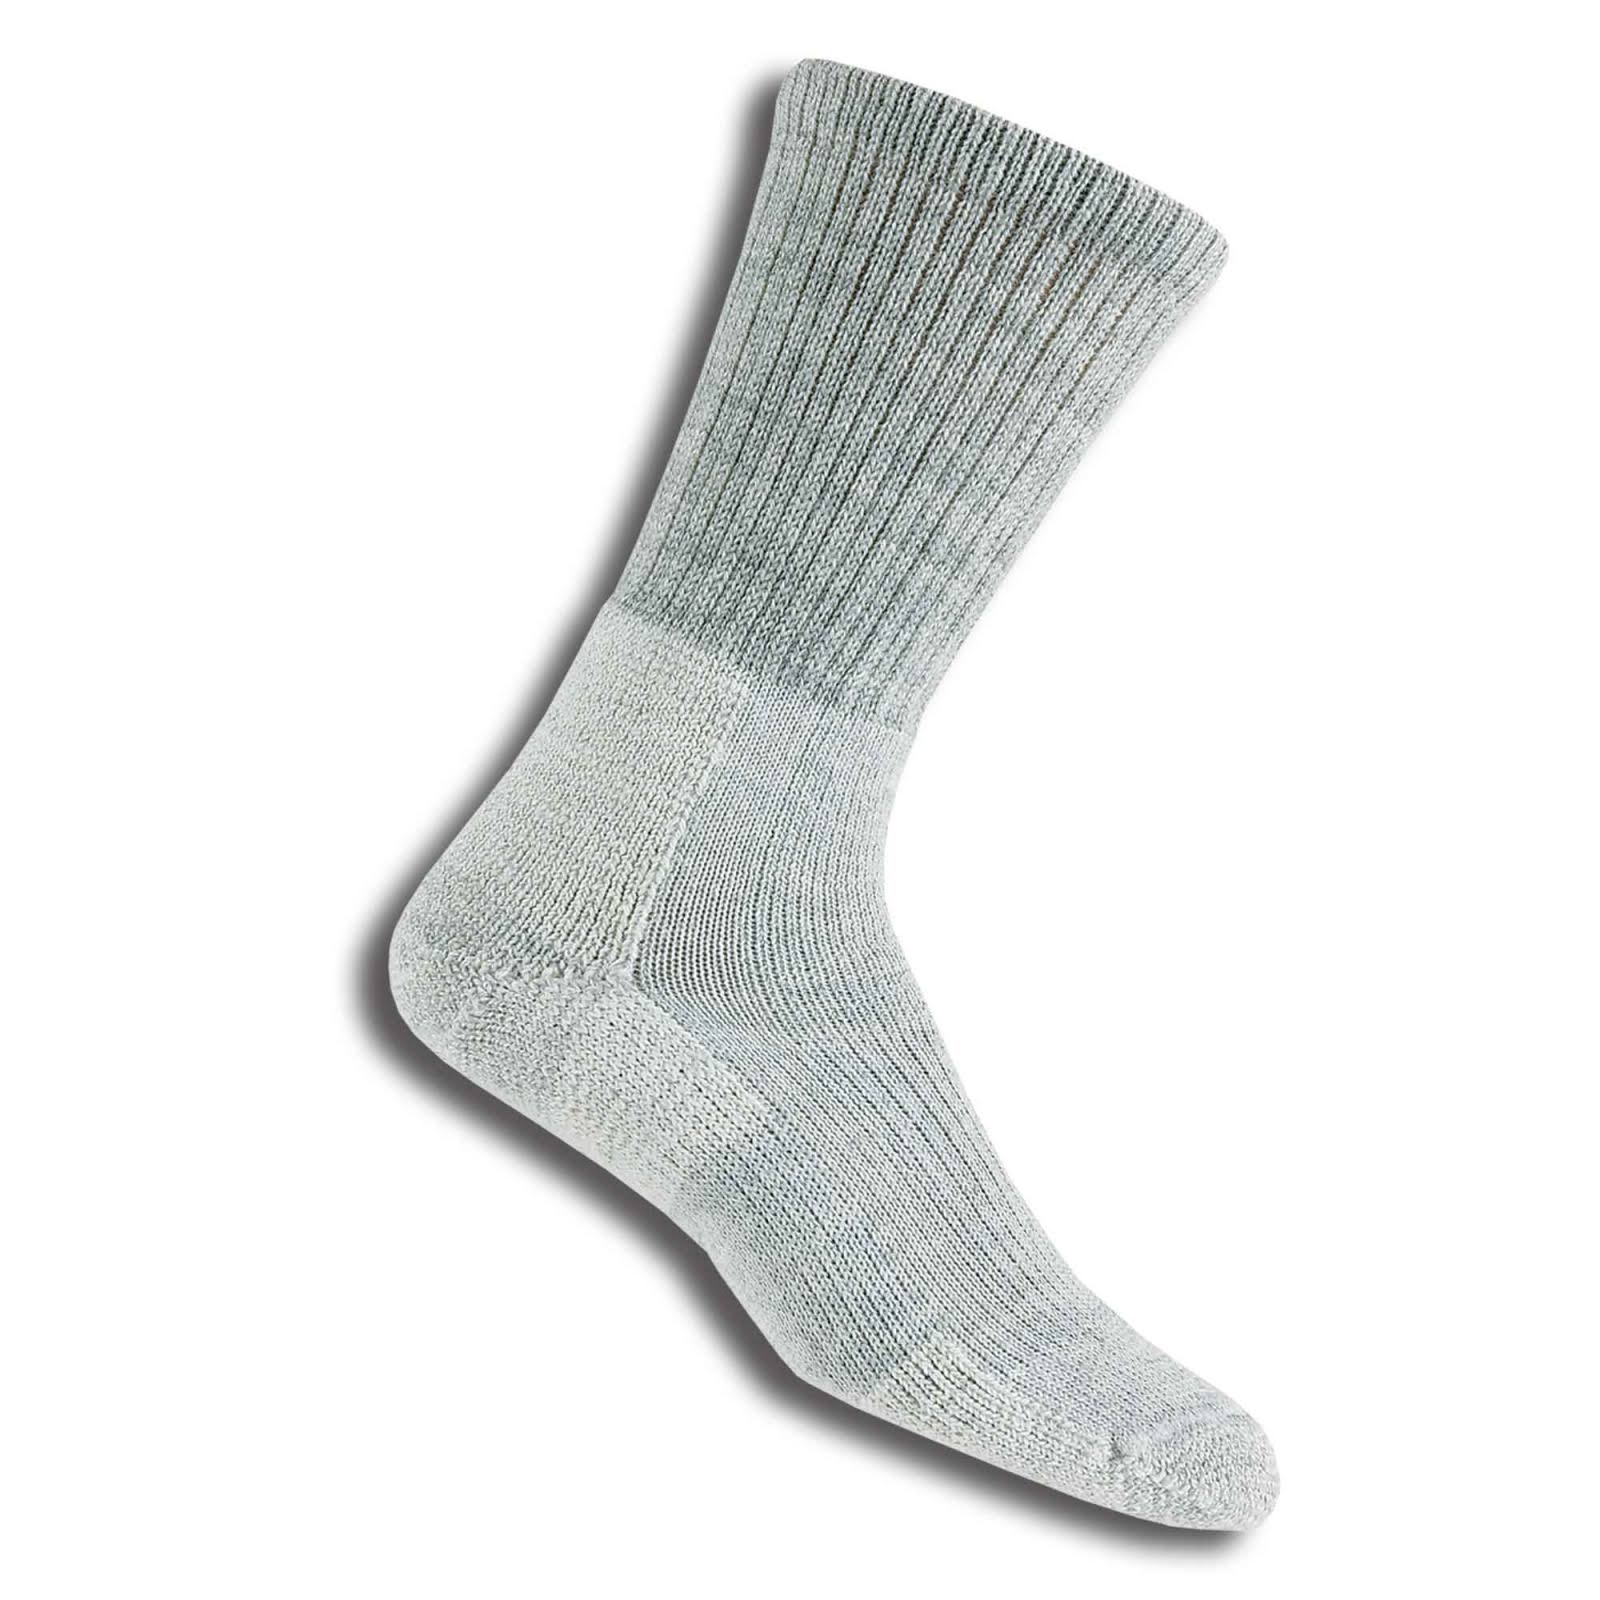 Thorlo Men's Extreme Cold Ski Socks - Light Gray, Large